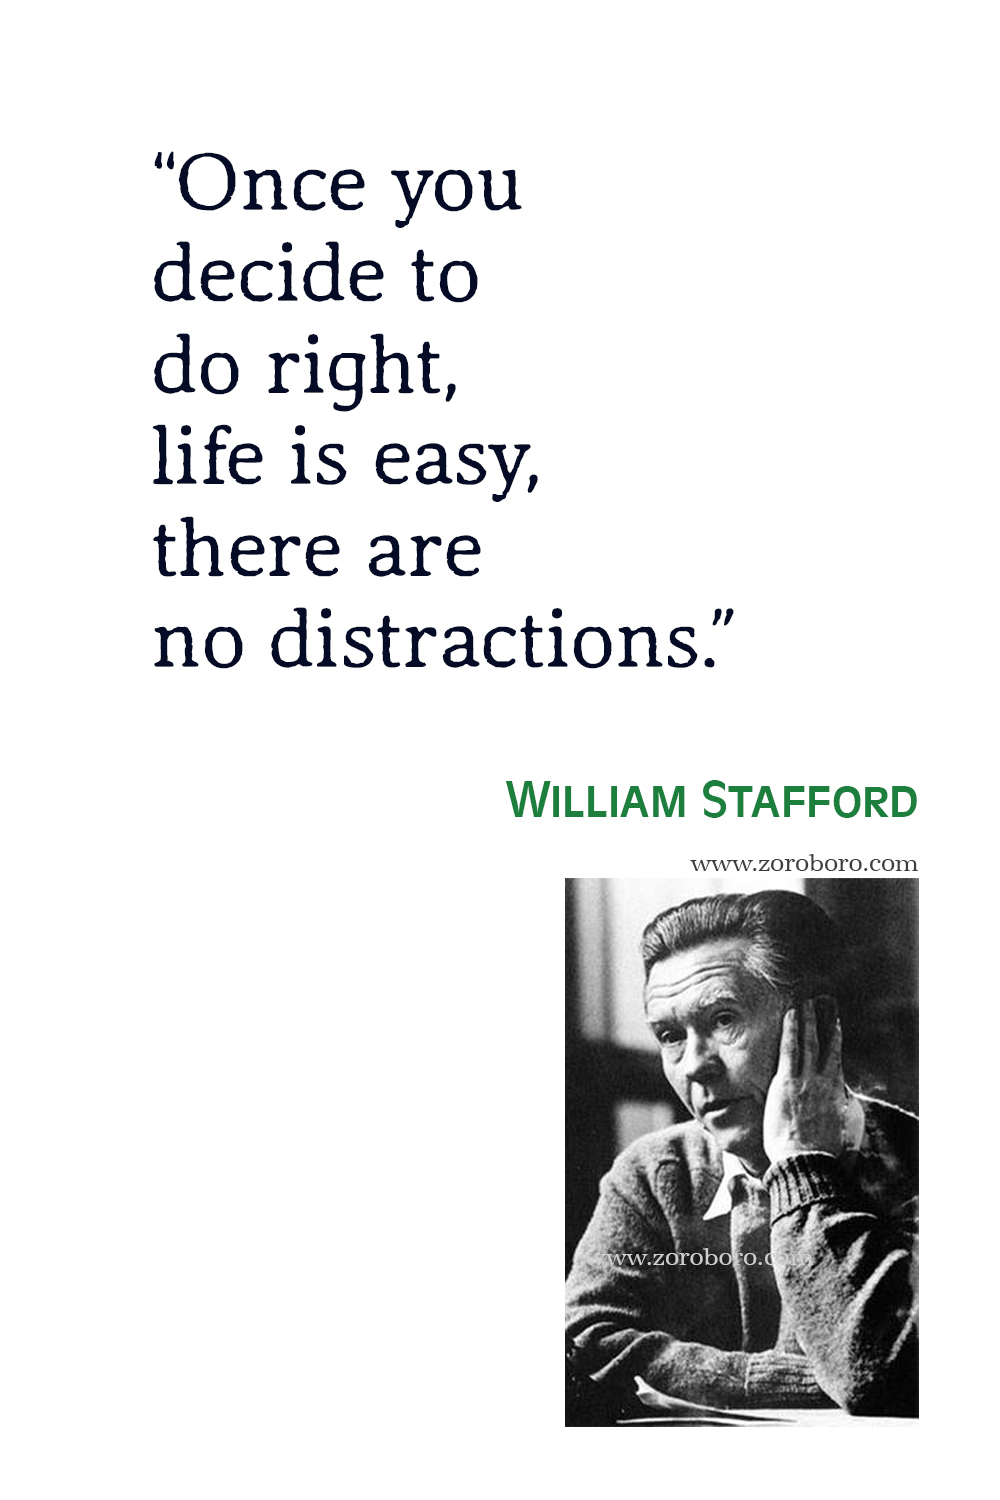 William Stafford Quotes, William Stafford Poems, William Stafford Poetry, William Stafford Books Quotes, William Stafford Selected Poems.William Stafford Art